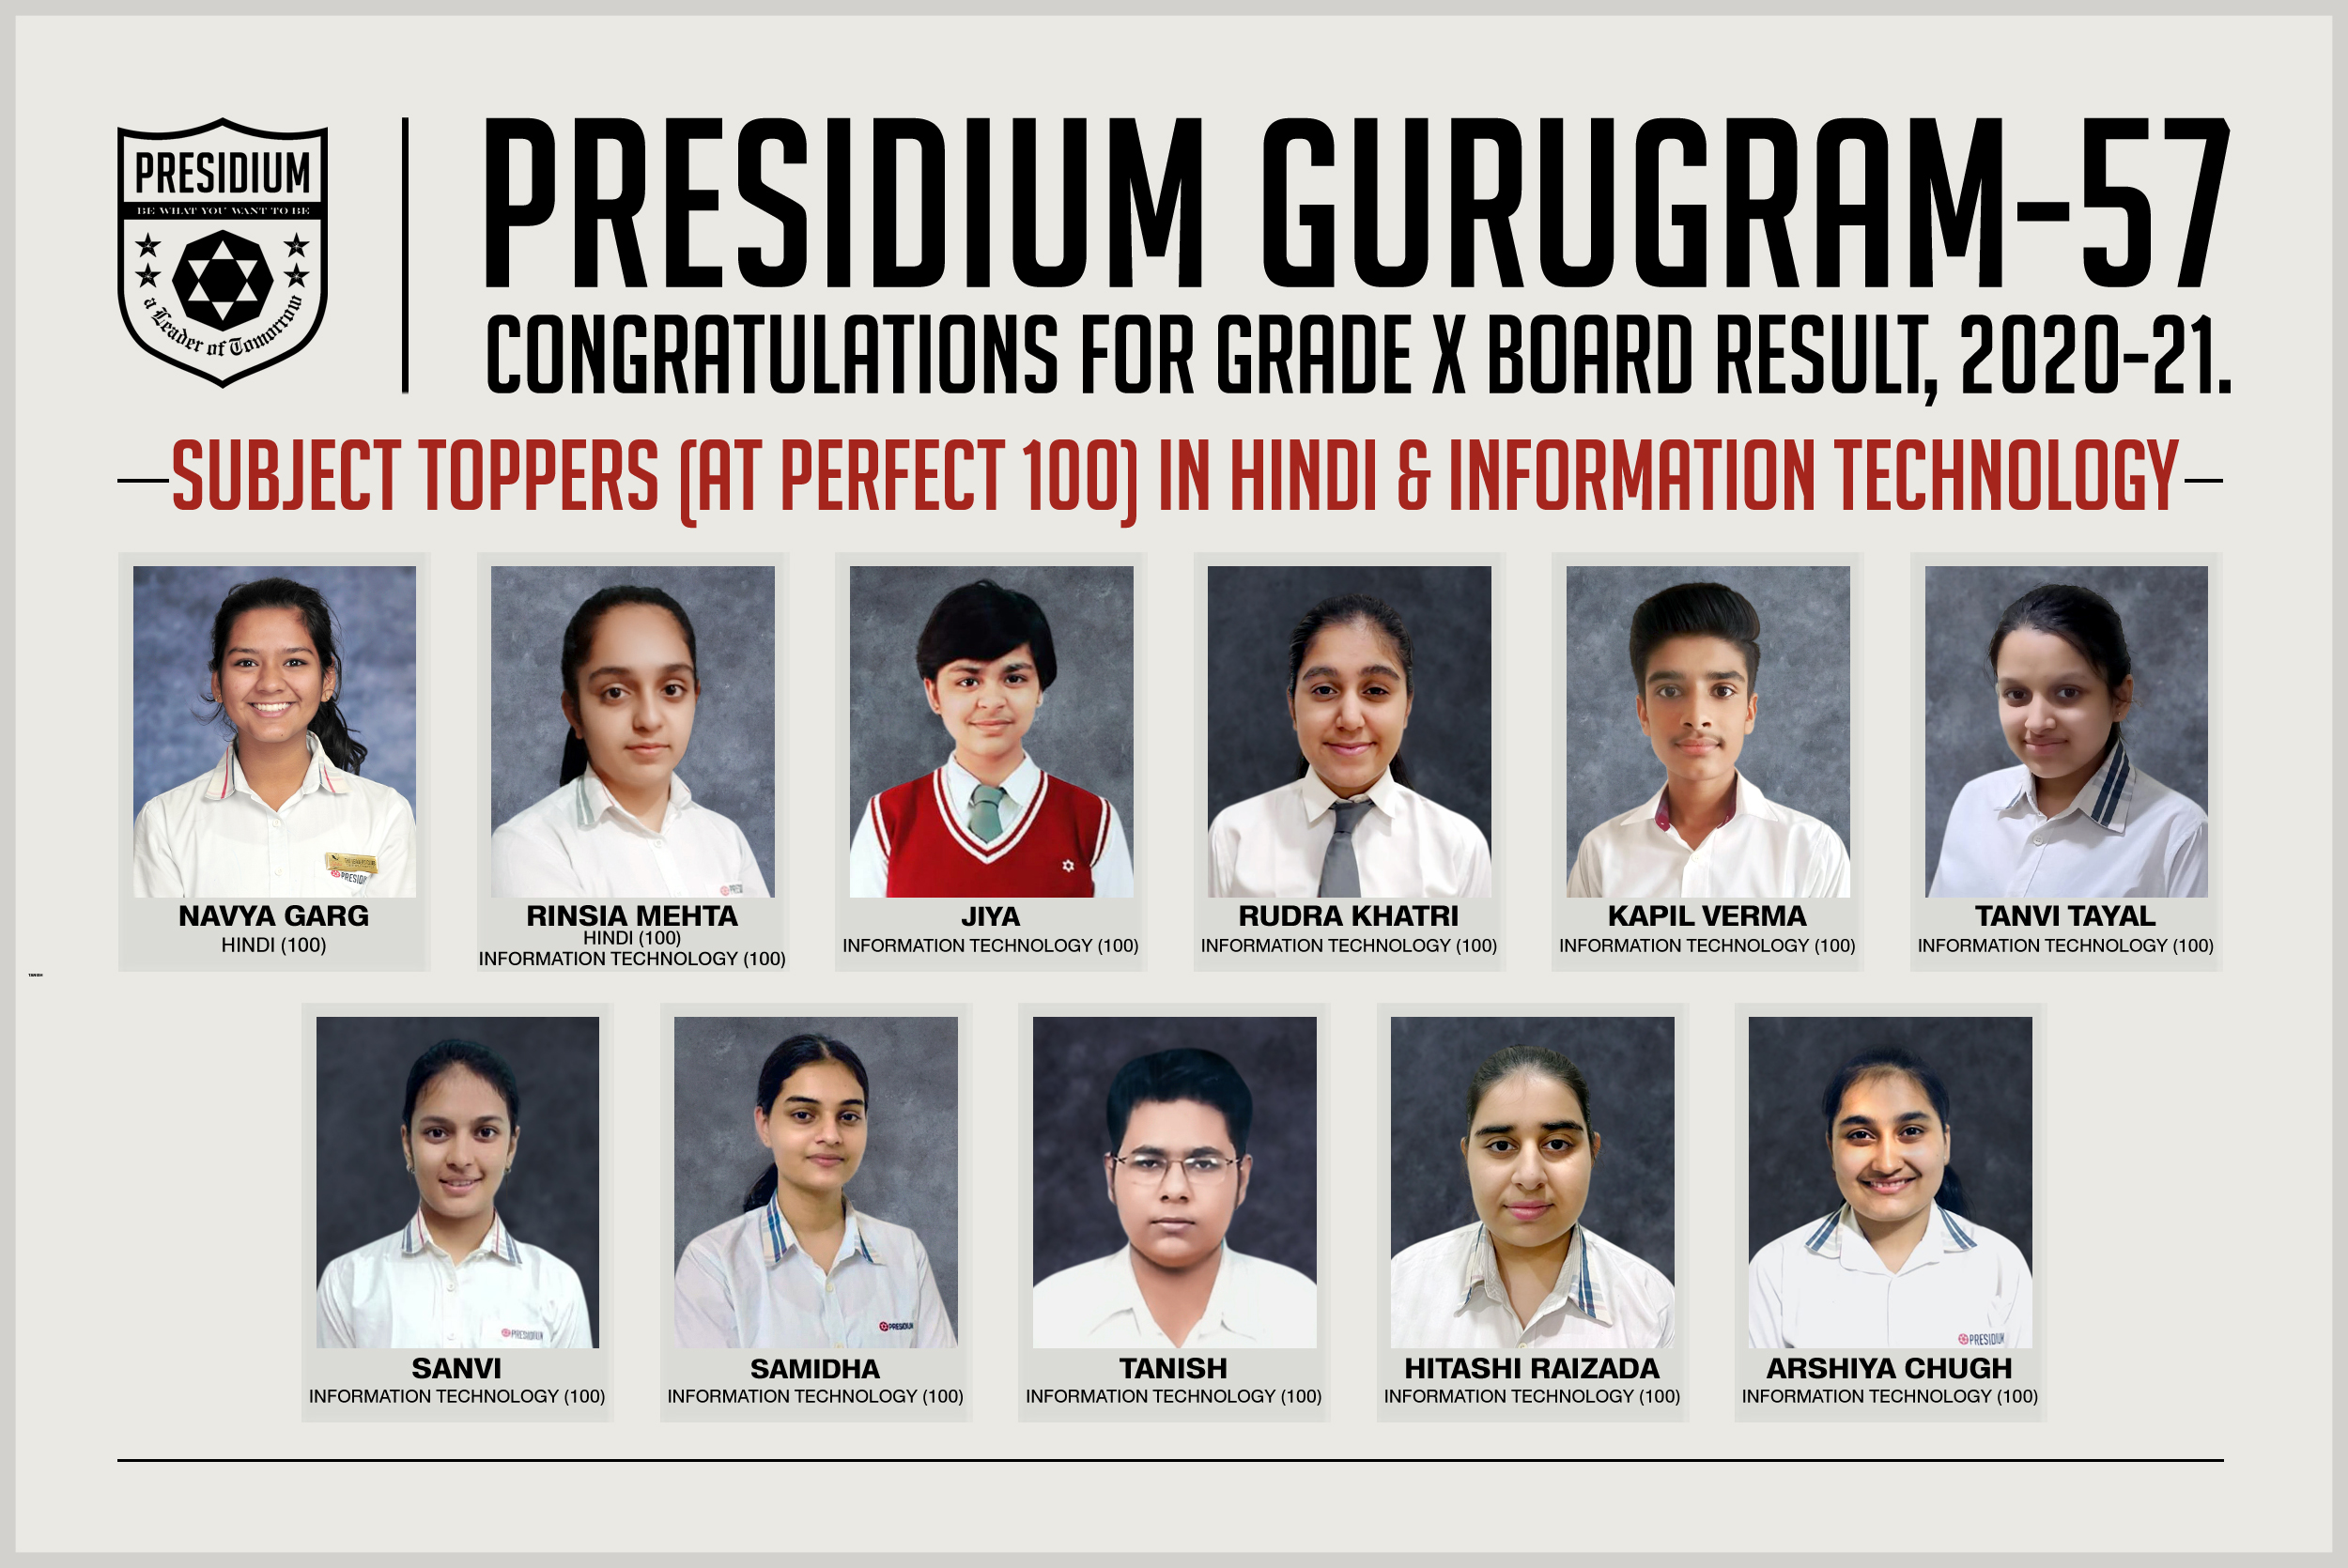 Presidium Gurgaon-57, KUDOS PRESIDIANS FOR EXCEPTIONAL XTH BOARD RESULTS (2020-21)